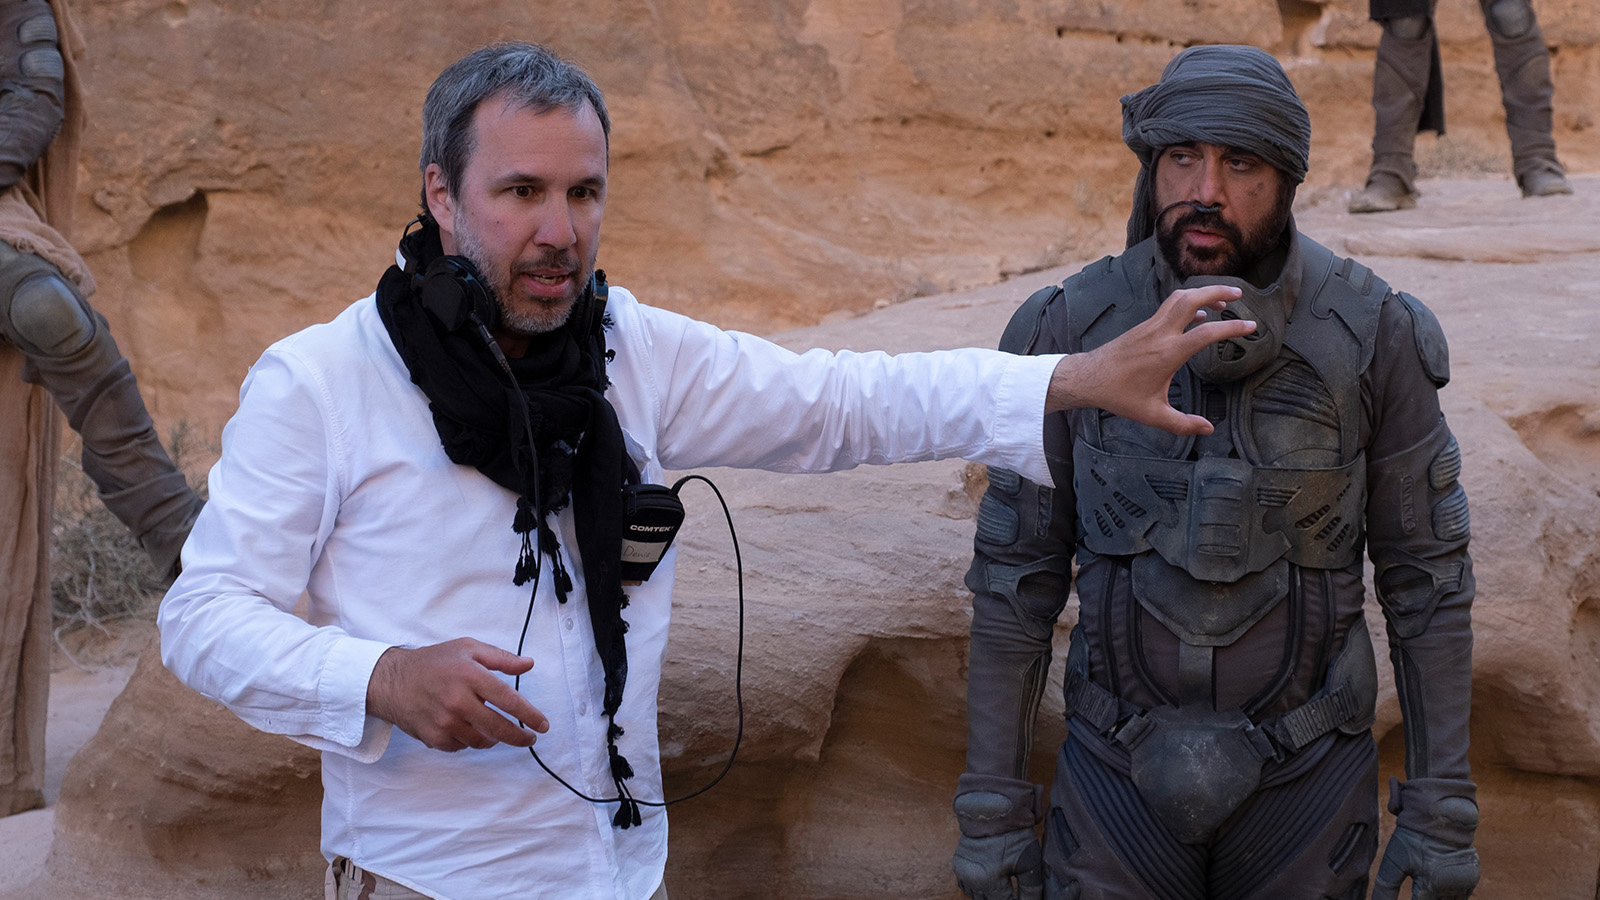 Dune director Denis Villeneuve with Javier Bardem on location in Jordan. Image © Warner Bros.